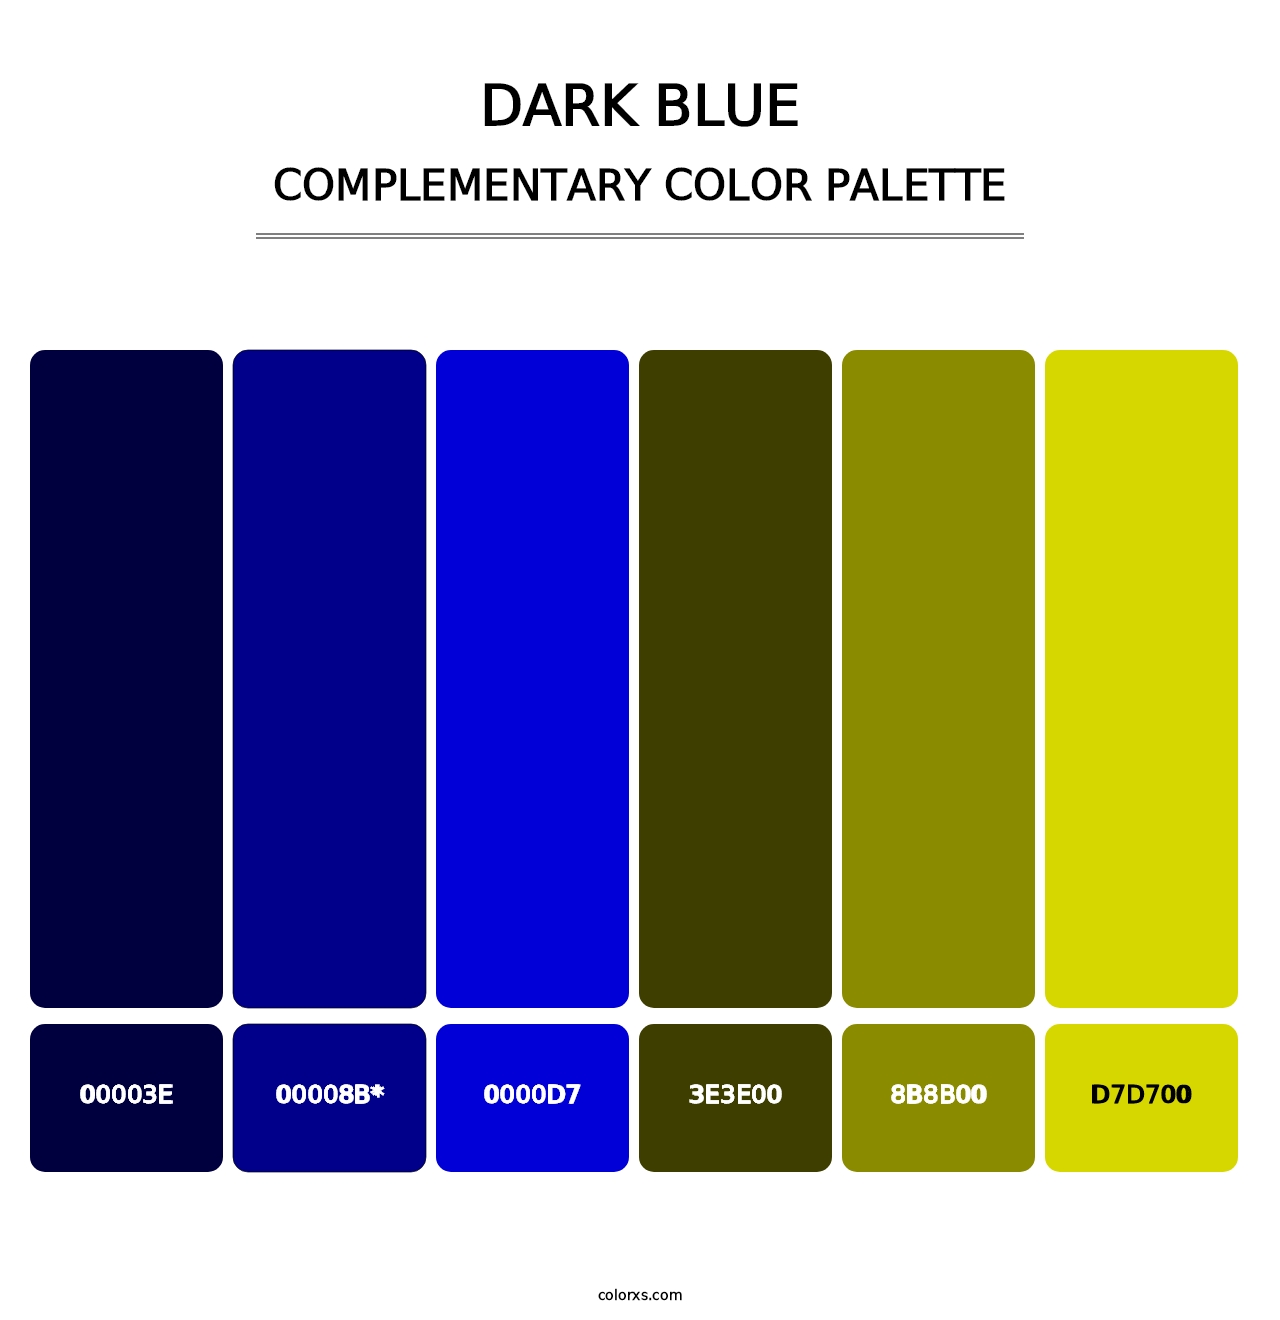 Dark Blue - Complementary Color Palette